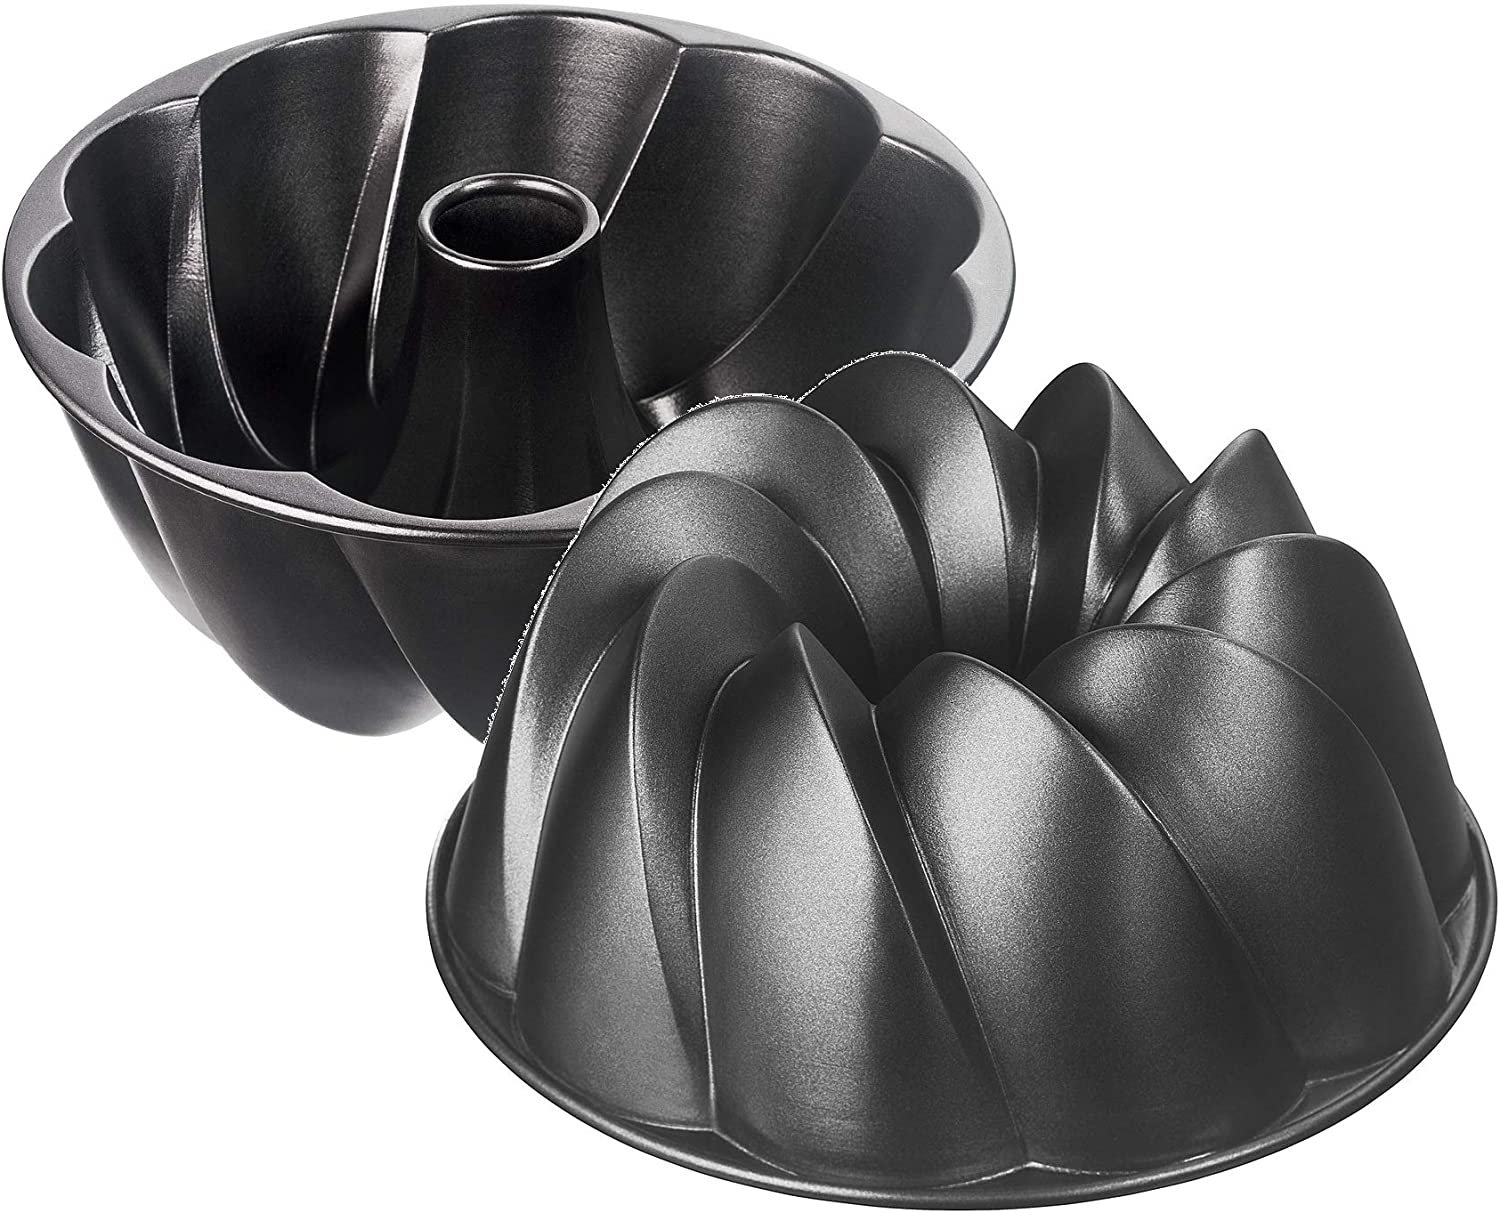 Kaiser Inspiration design bundt cake mould diameter 25 cm with surface structure cast aluminium coating even browning